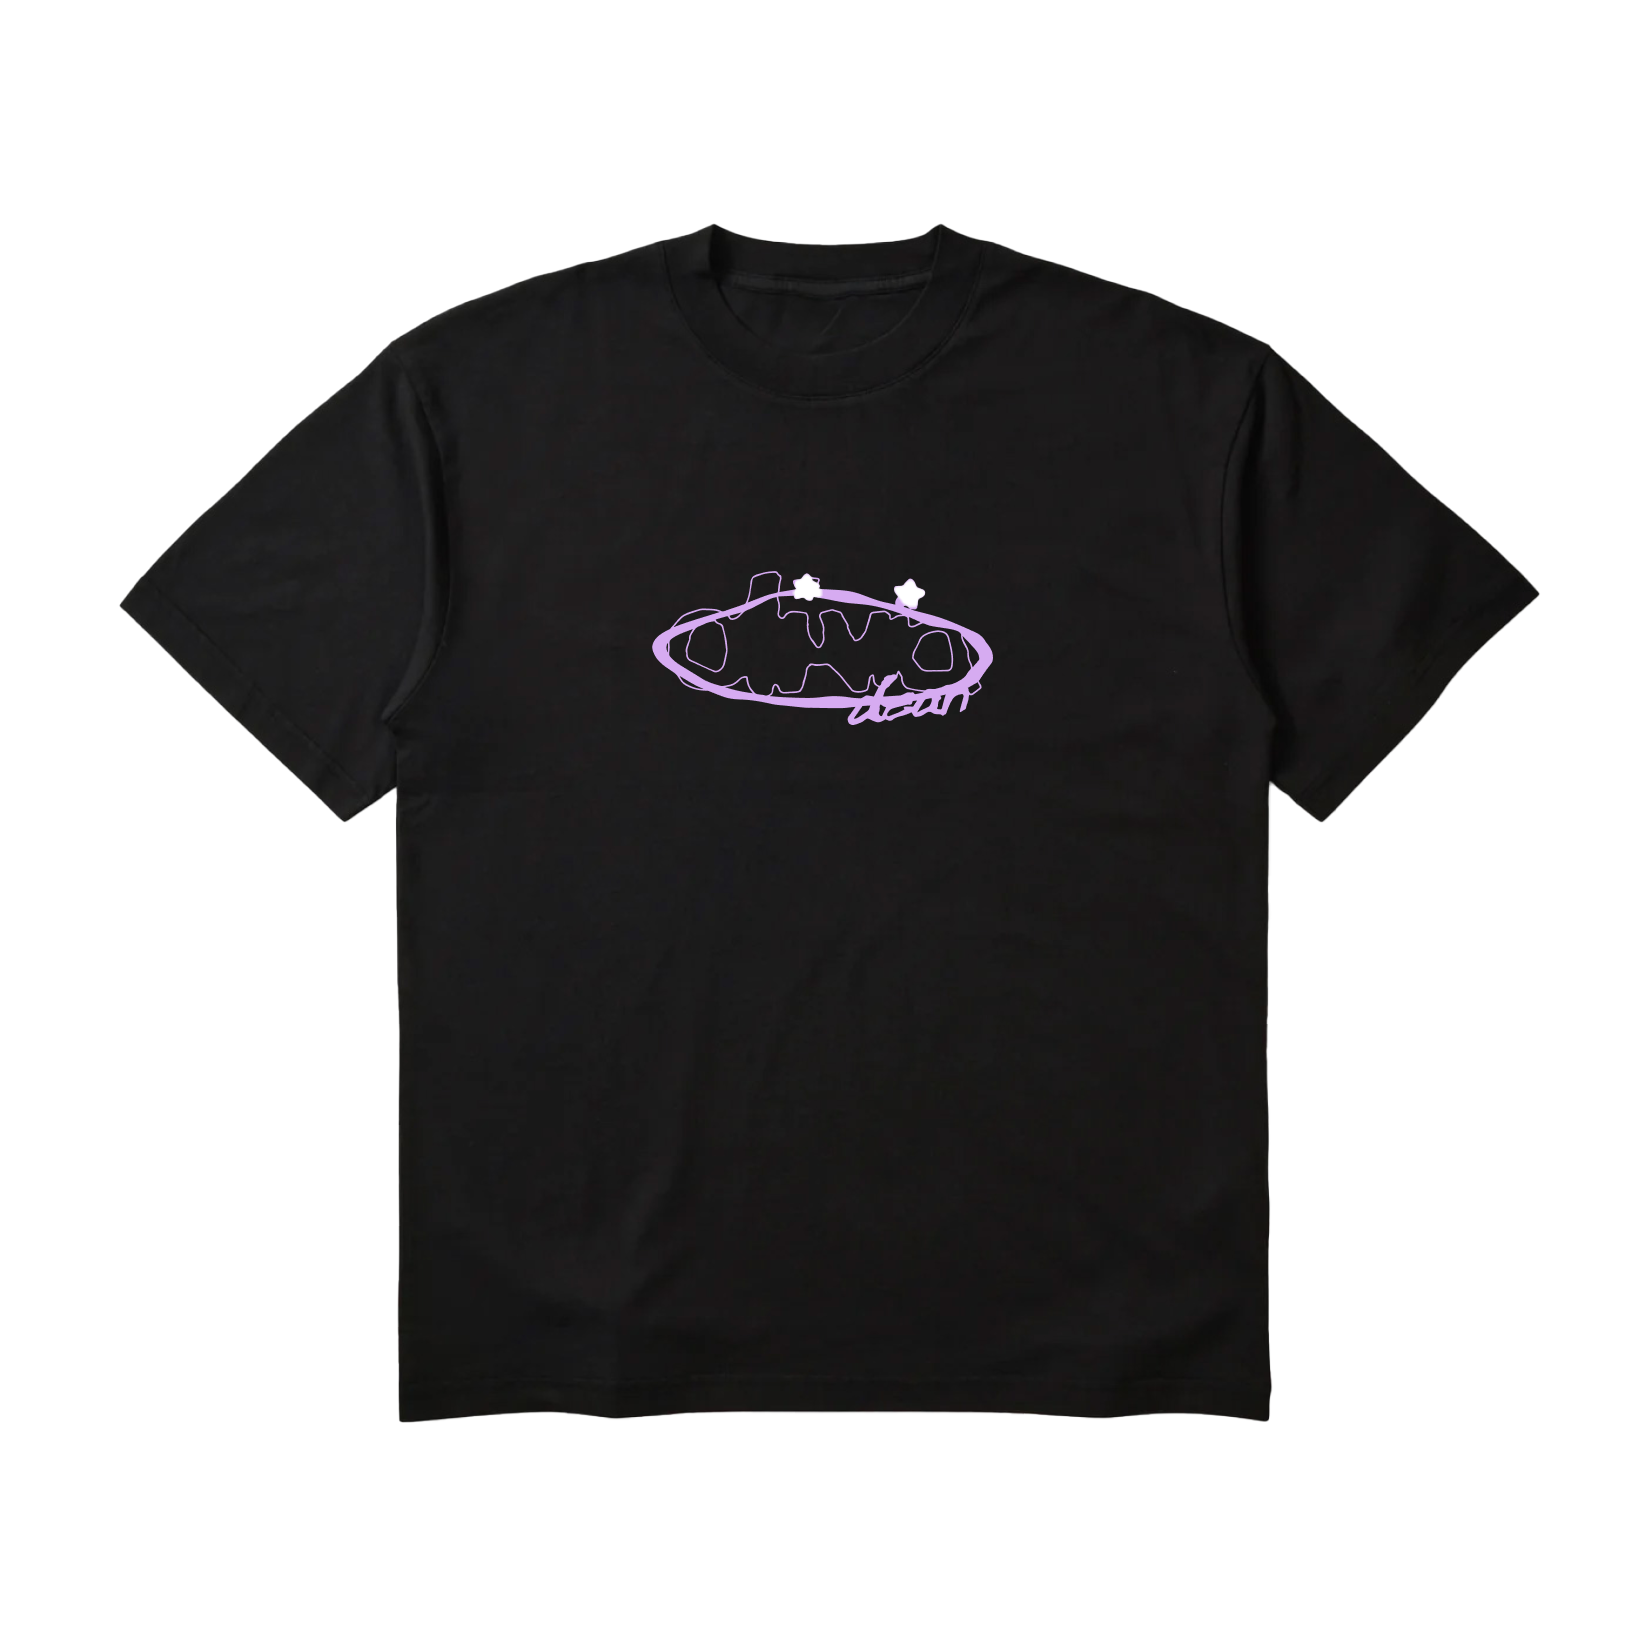 Olivia Dean - Tour T-Shirt